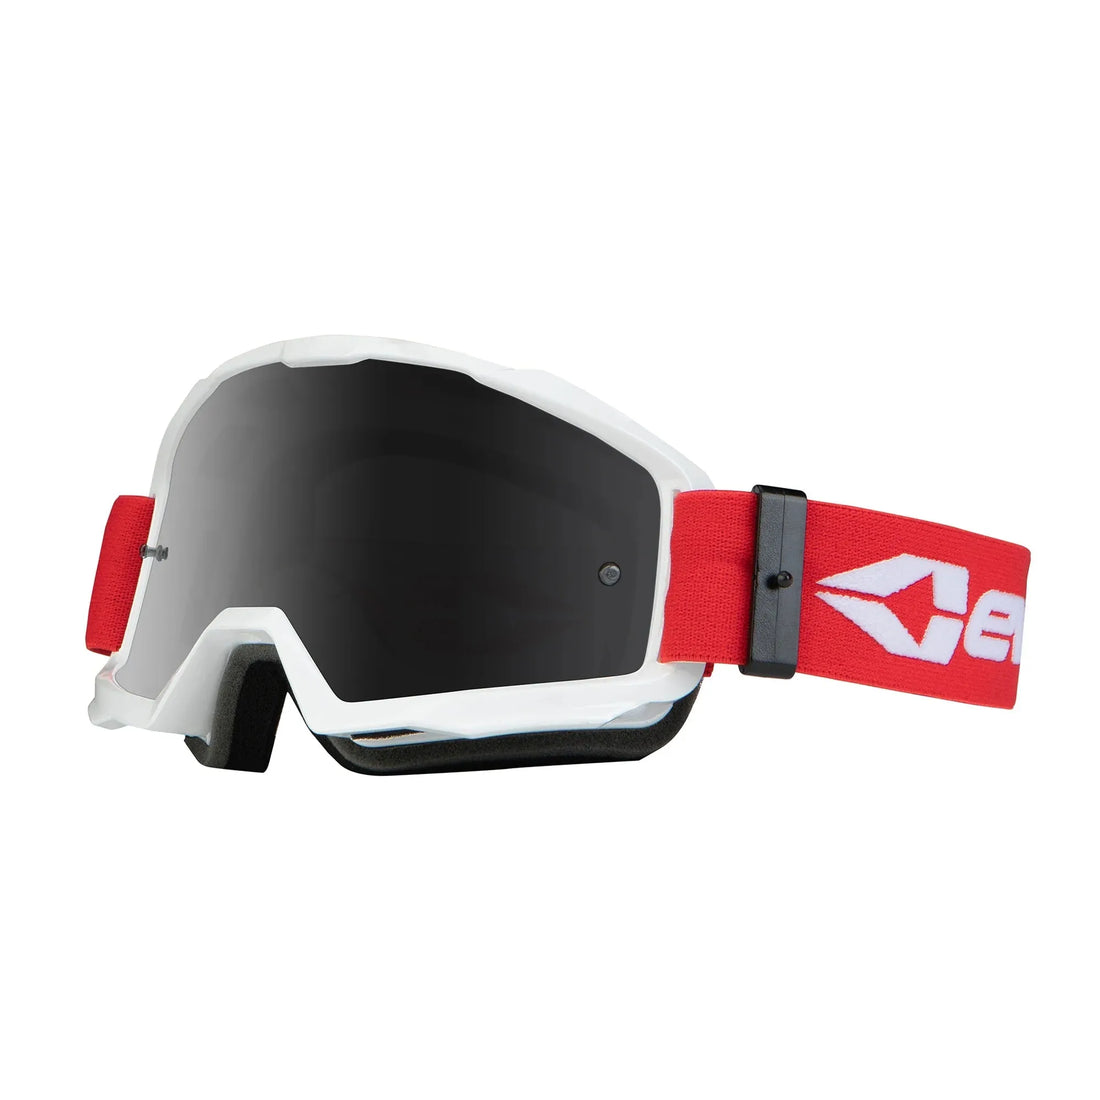 Introducing EVS ATV Goggles - Premium Eye Protection